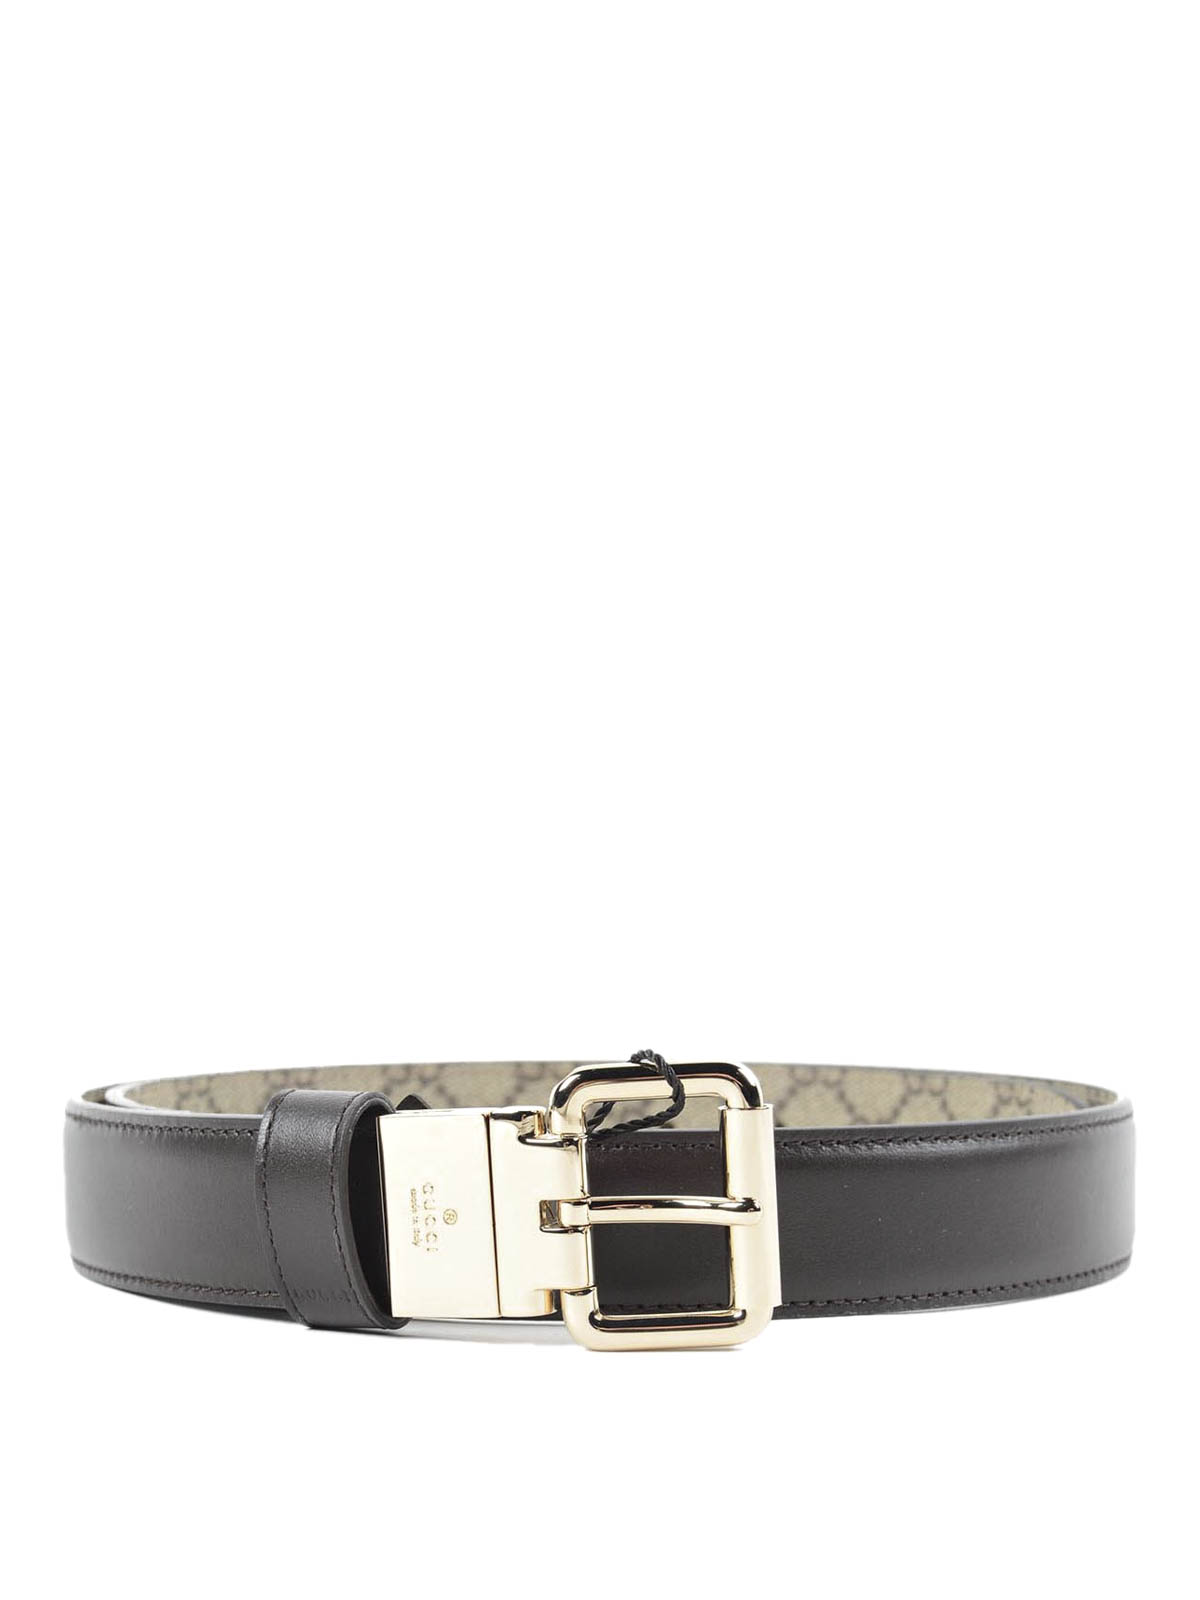 Supreme reversible belt by Gucci - belts | iKRIX